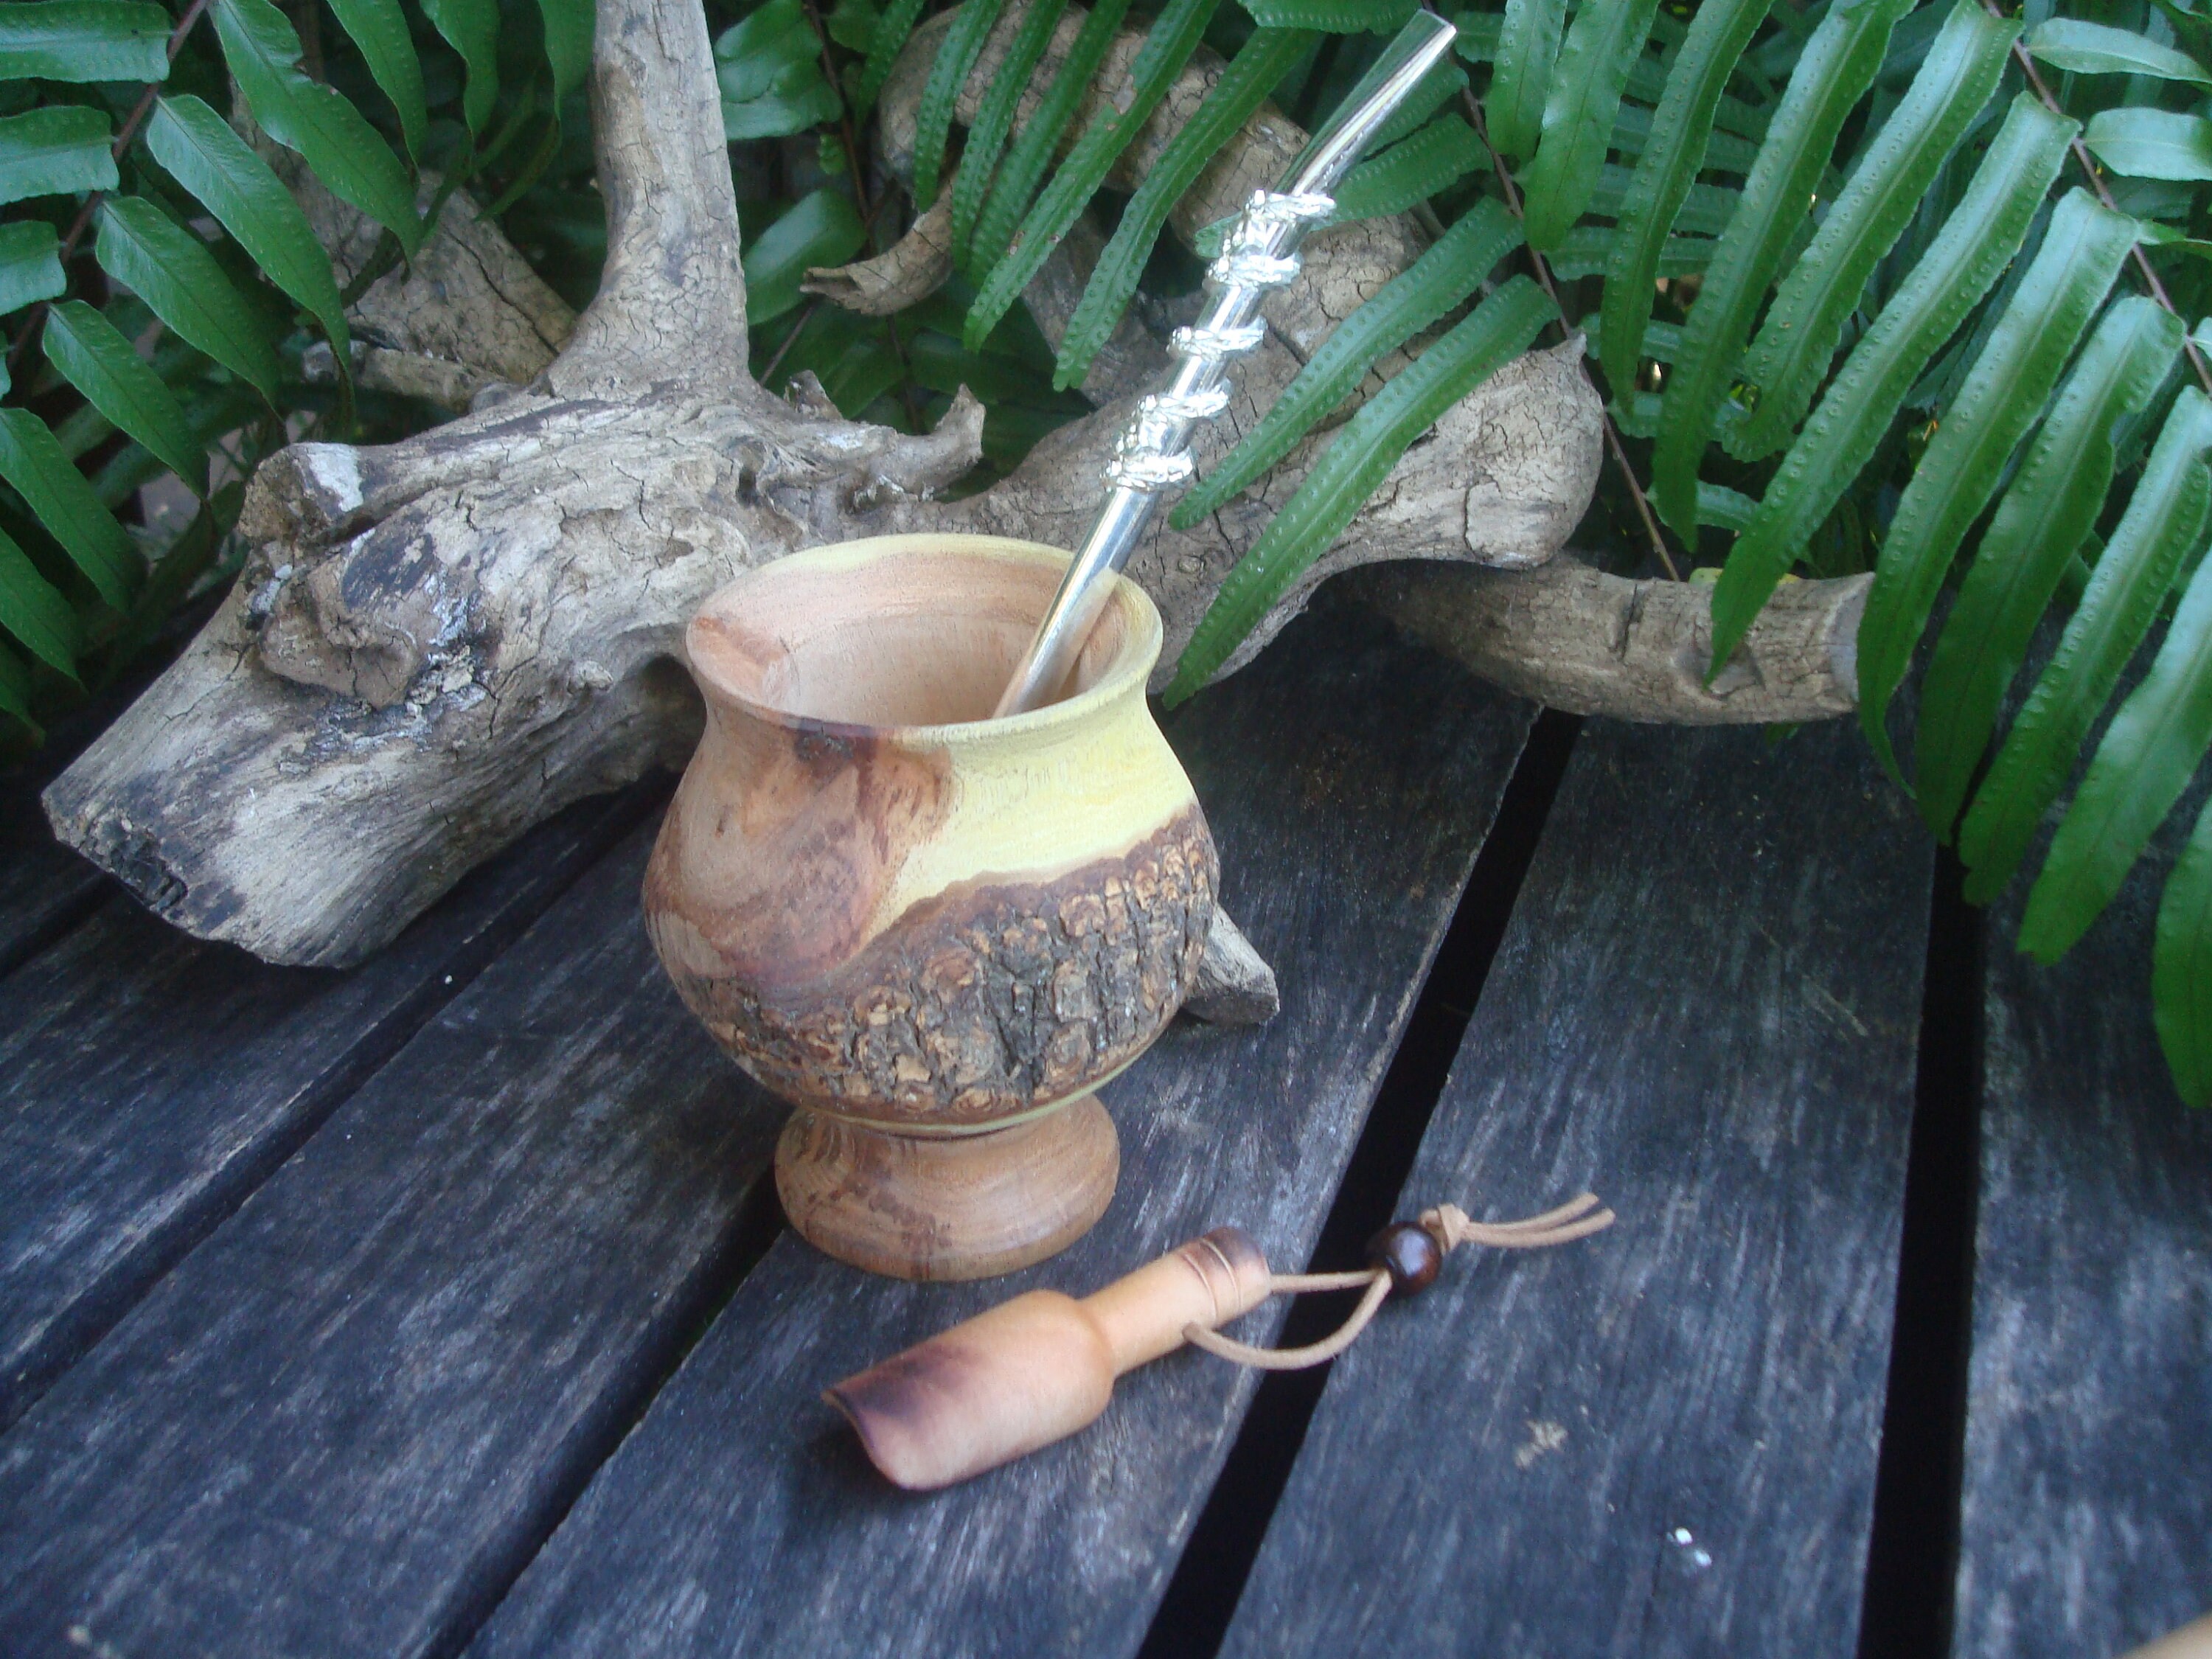 Rustic, Natural Wood Mate, Mate de Madera Algarrobo, Wooden Yerba Mate,  Cup- Straw - Spoon Handmade in Argentina, Mate Argentinian